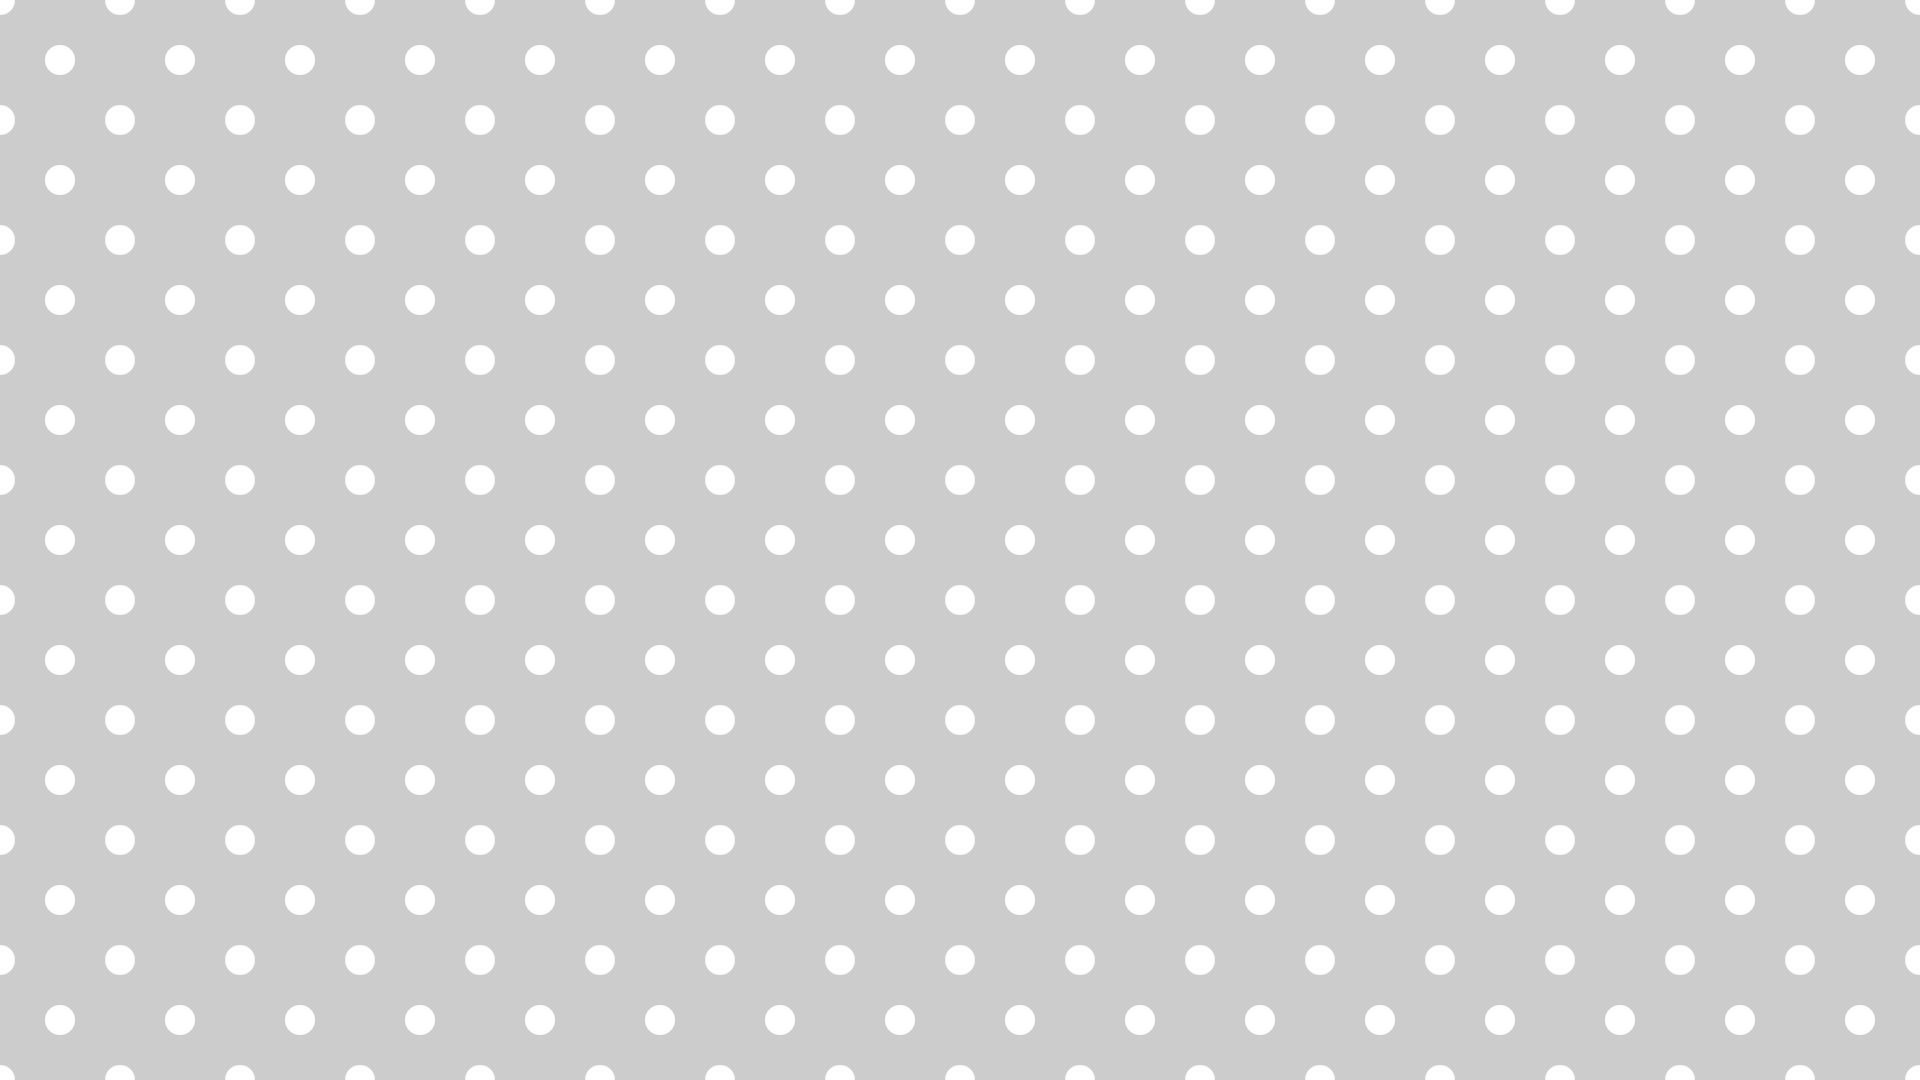 1920x1080 hd pics photos stunning attractive polka dots 25 hd desktop background  wallpaper